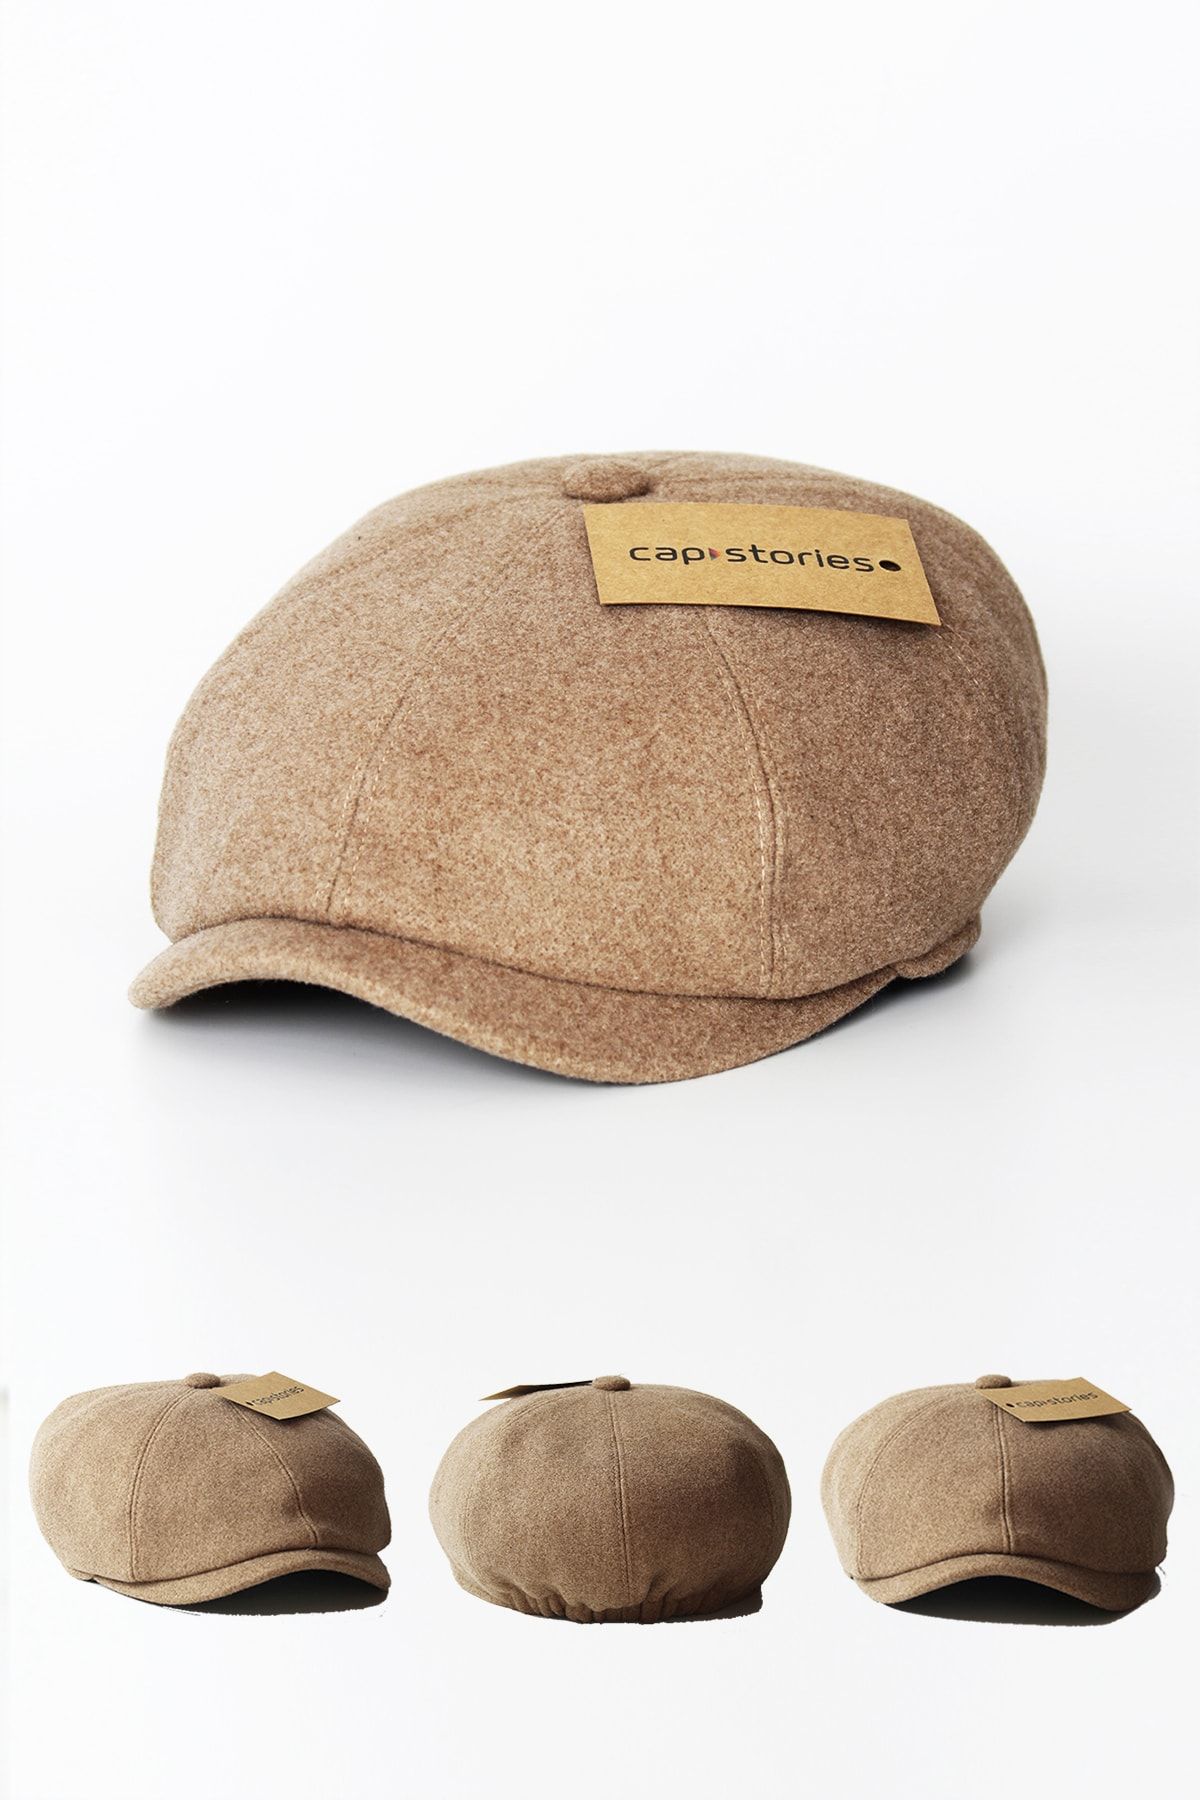 Capstories Erkek Kasket Peaky Blinders Model 8 Parça Açık Kahve Kışlık Şapka